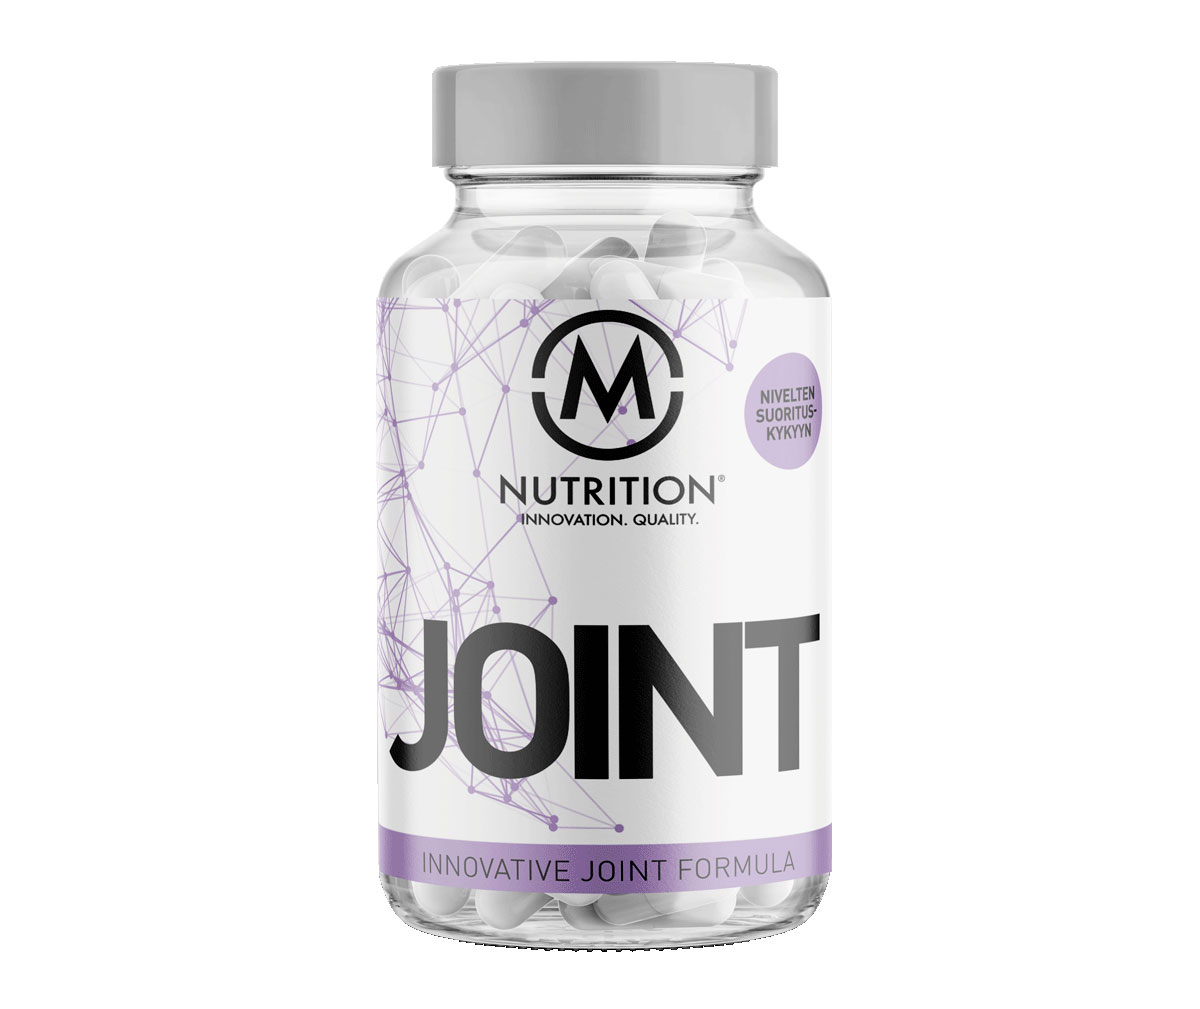 M-Nutrition Joint, 120 kaps.